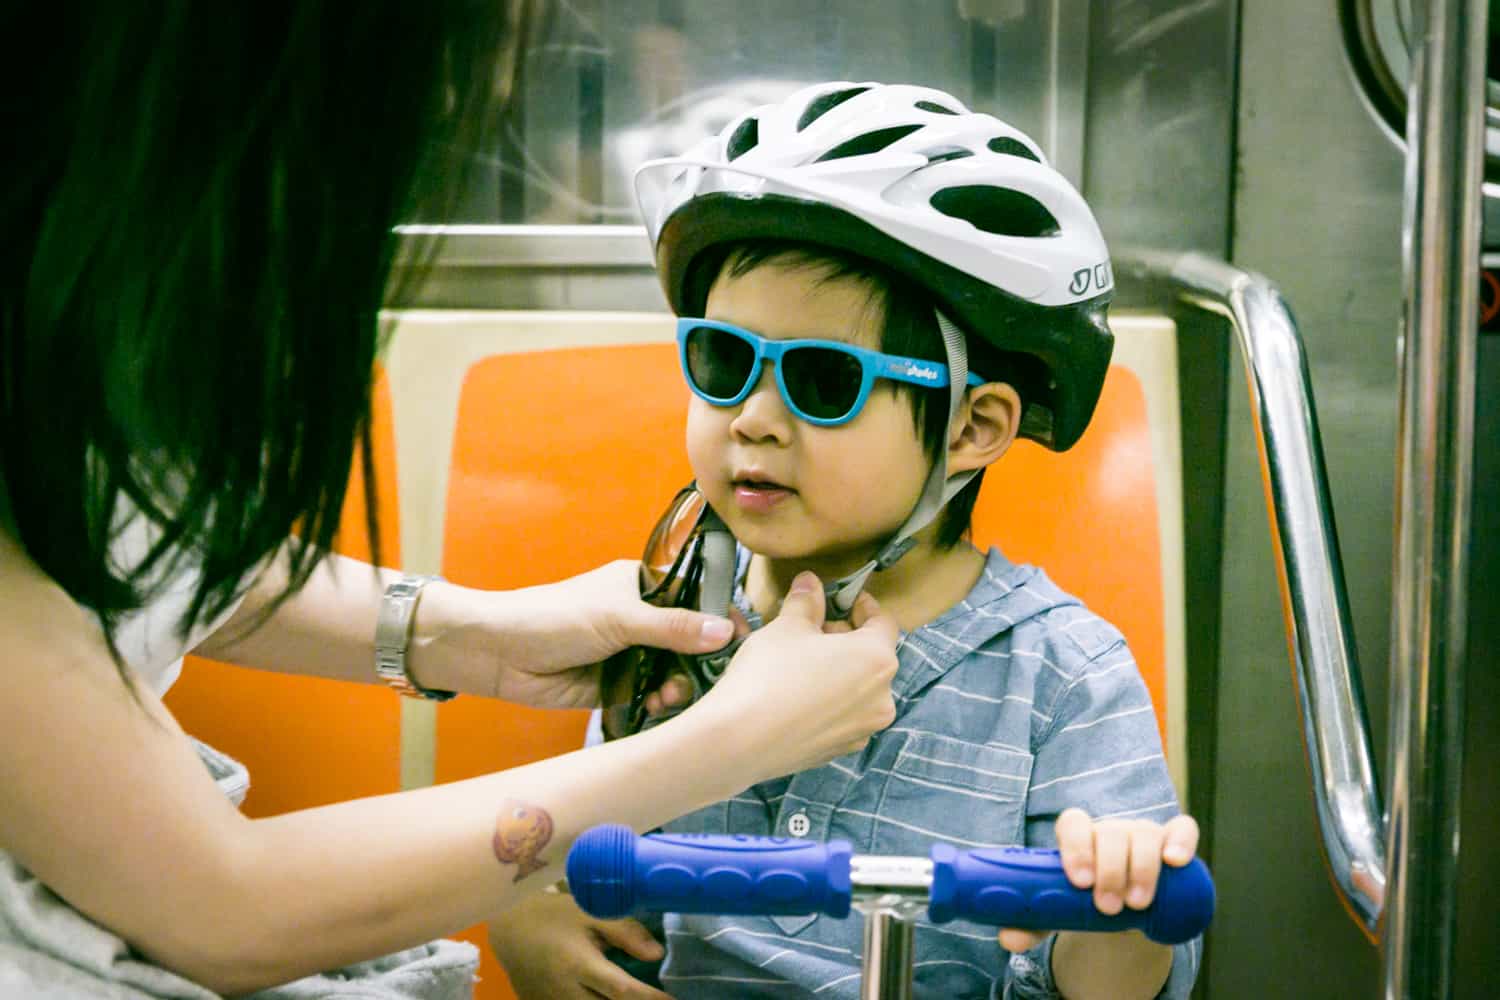 Mother attaching helmet on little boy wearing sunglasses